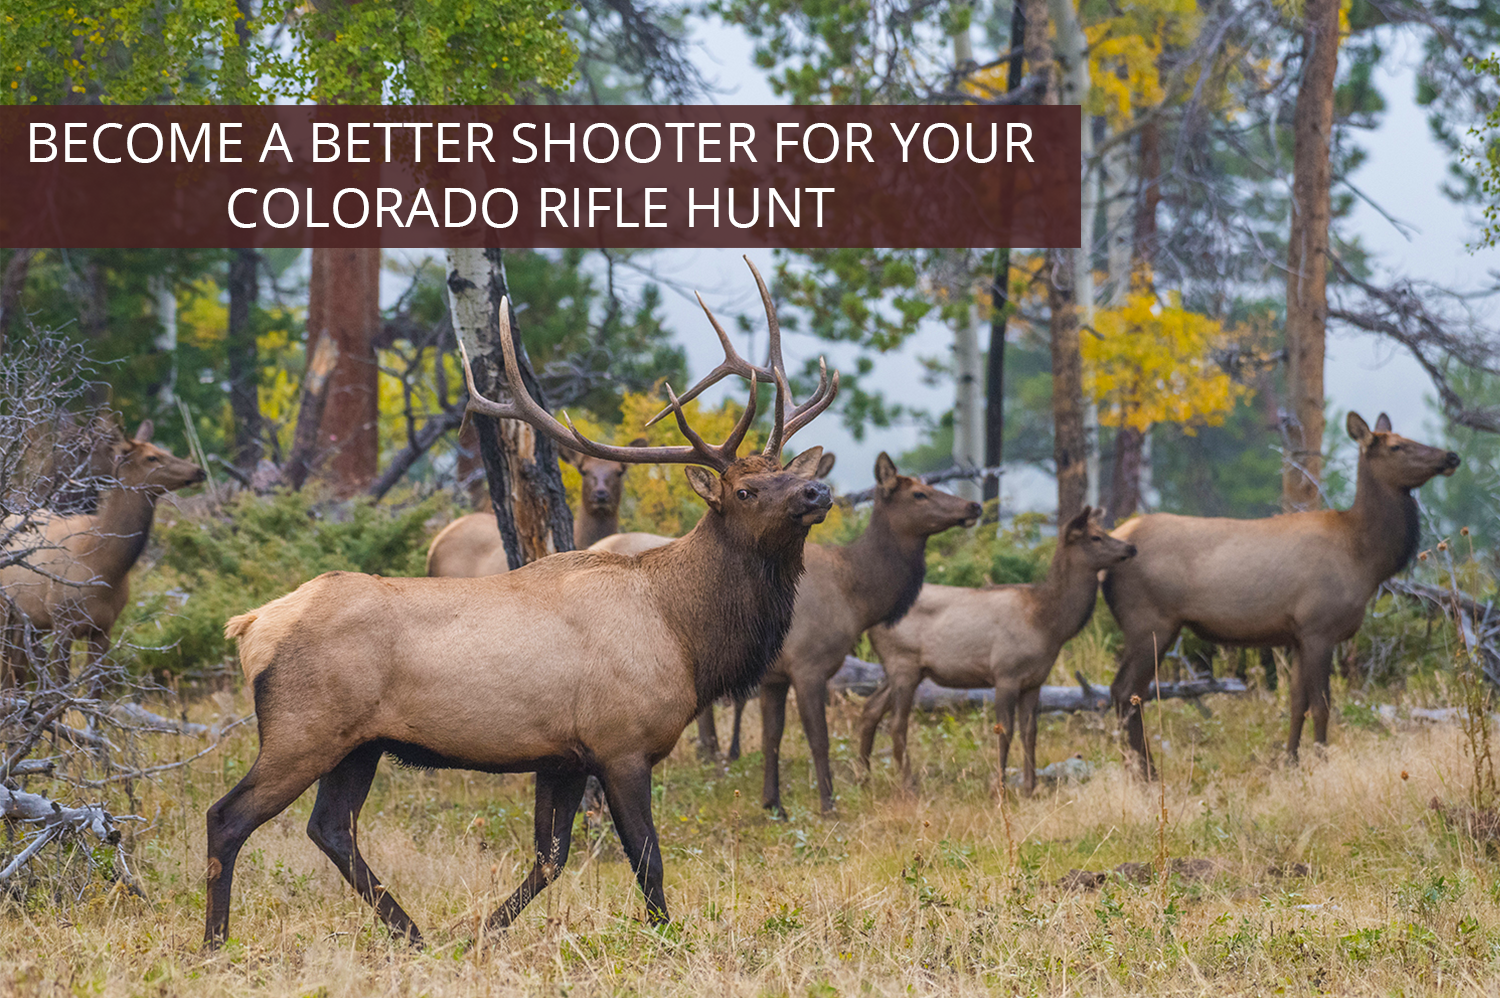 Elk seen on a Colorado rifle hunt.